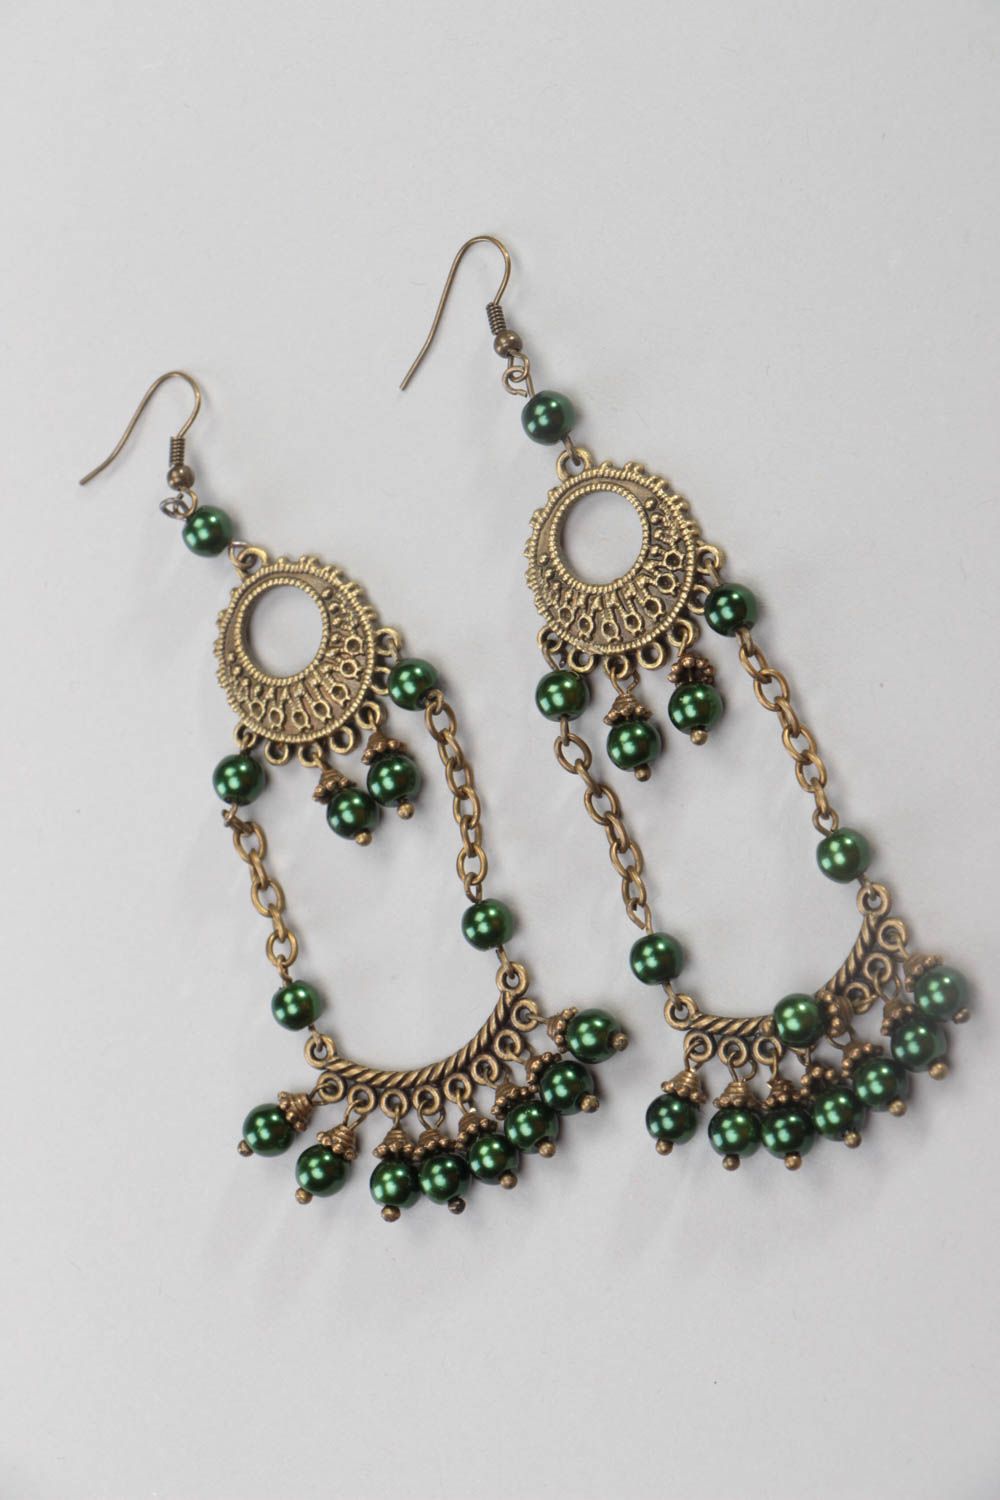 Handmade earrings with charms unusual stylish accessories beautiful jewelry photo 2